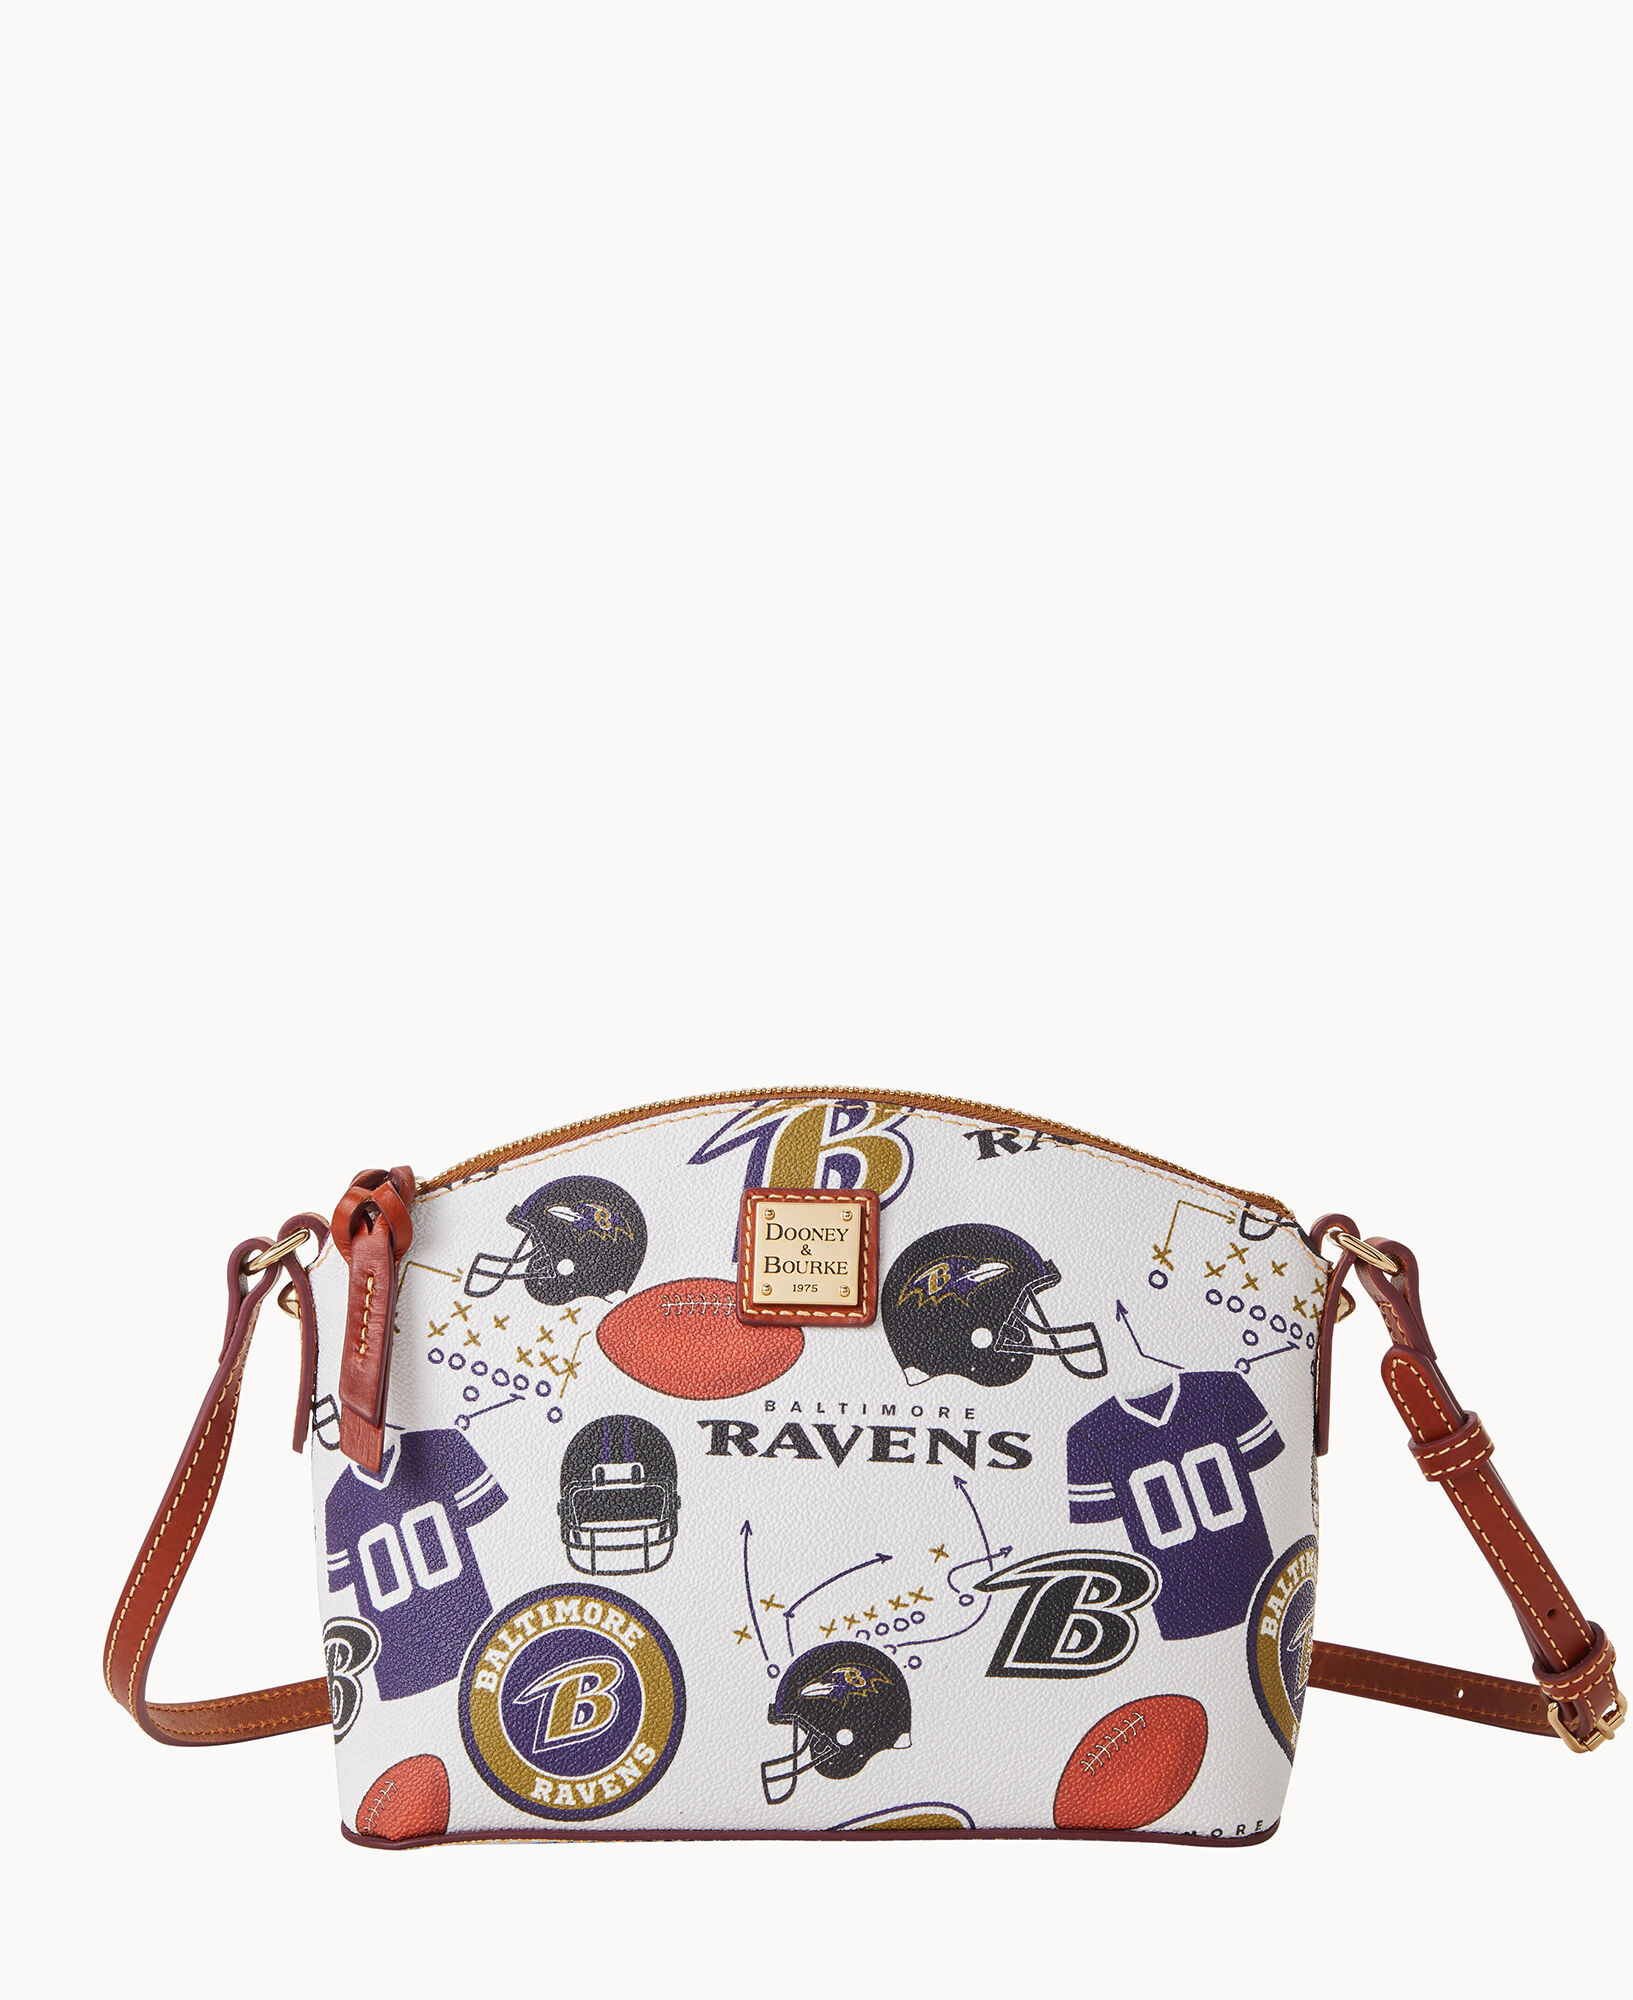 Dooney & Bourke Baltimore Ravens Small Zip Crossbody Bag